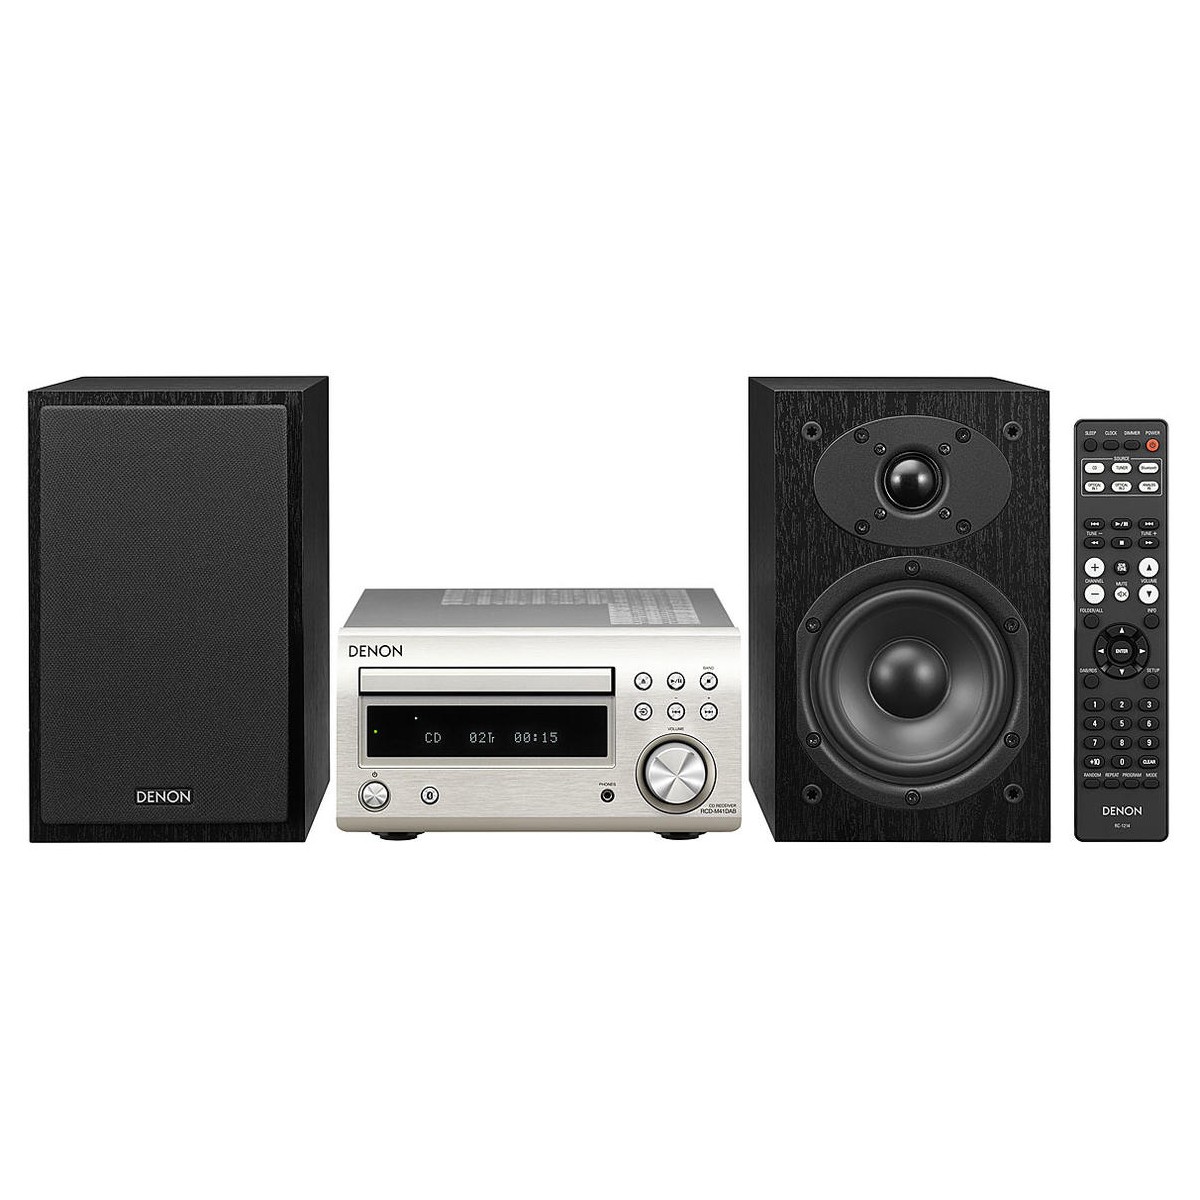 Mini stereo systém: D-M41 DAB+